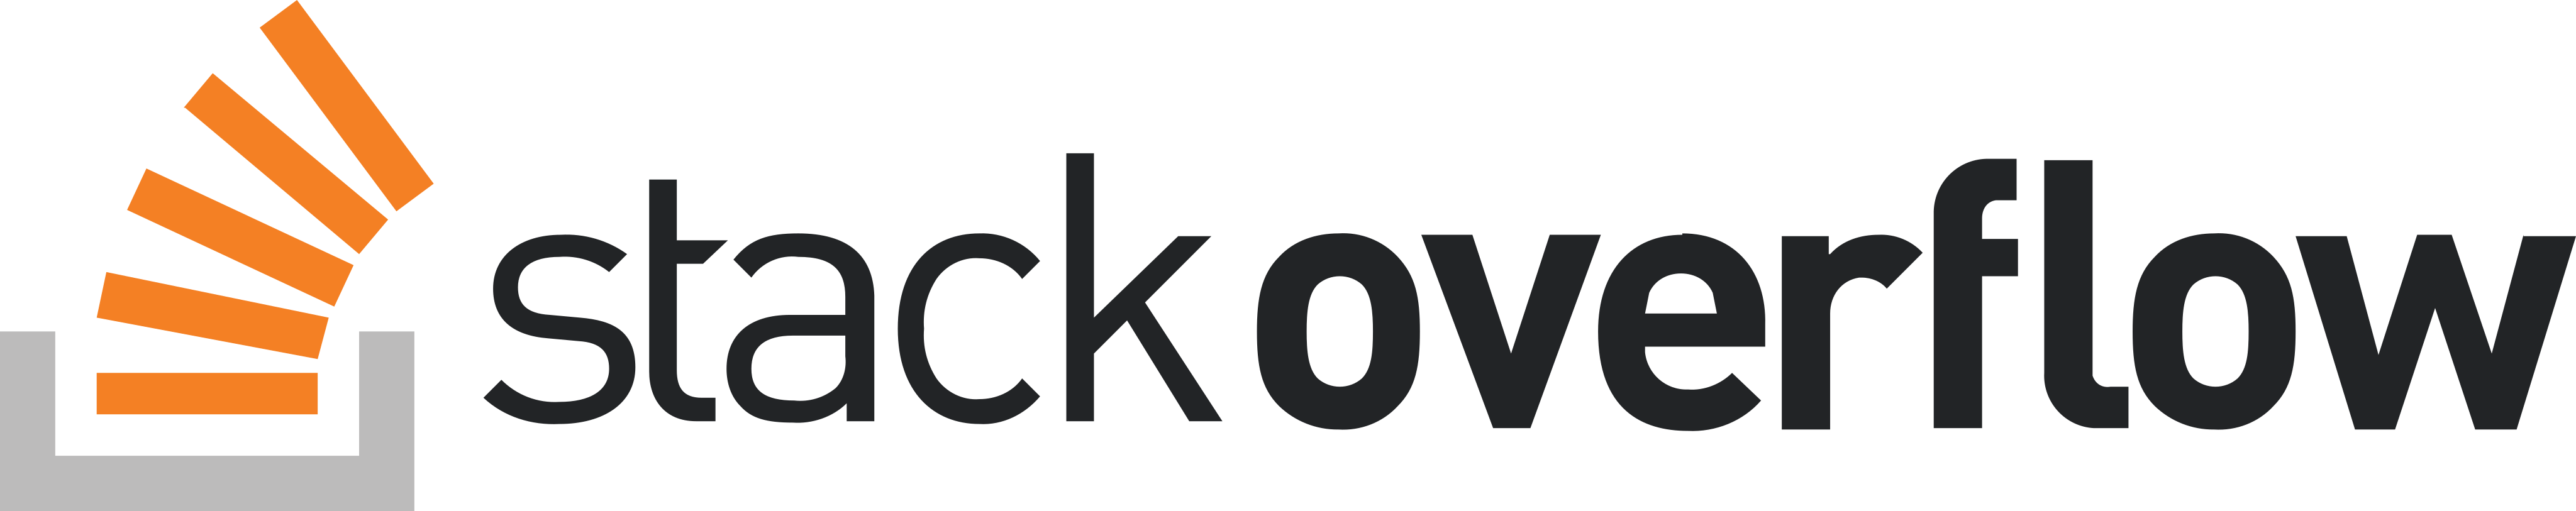 stack overflow logo - Stack Overflow Logo